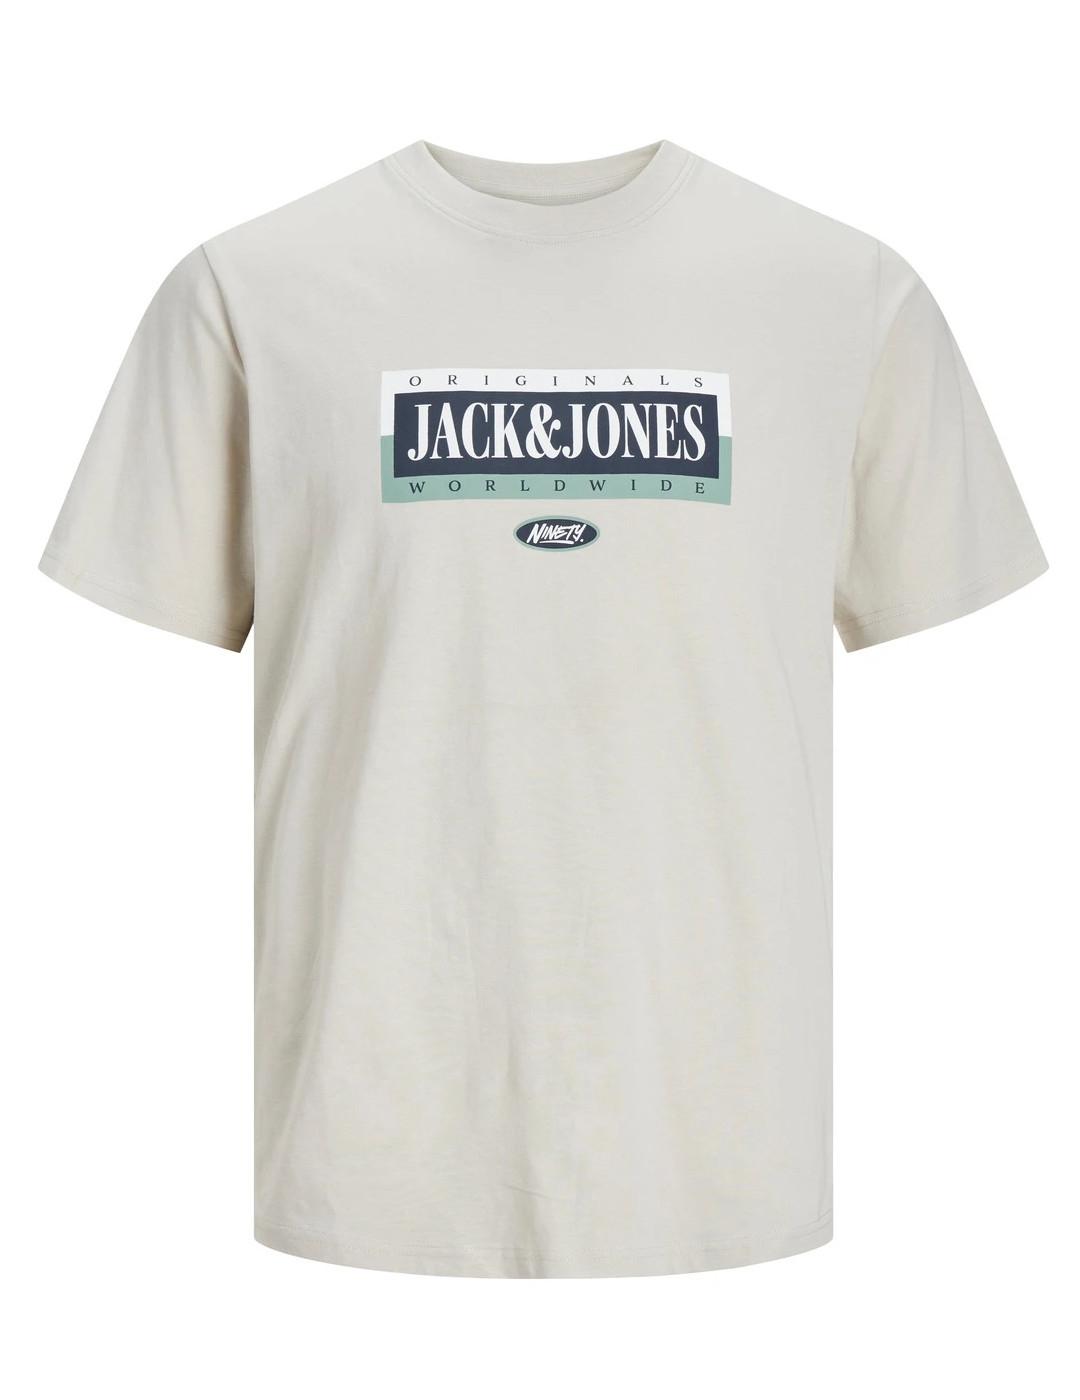 Camiseta Jack&Jones Cobin beige manga corta para hombre